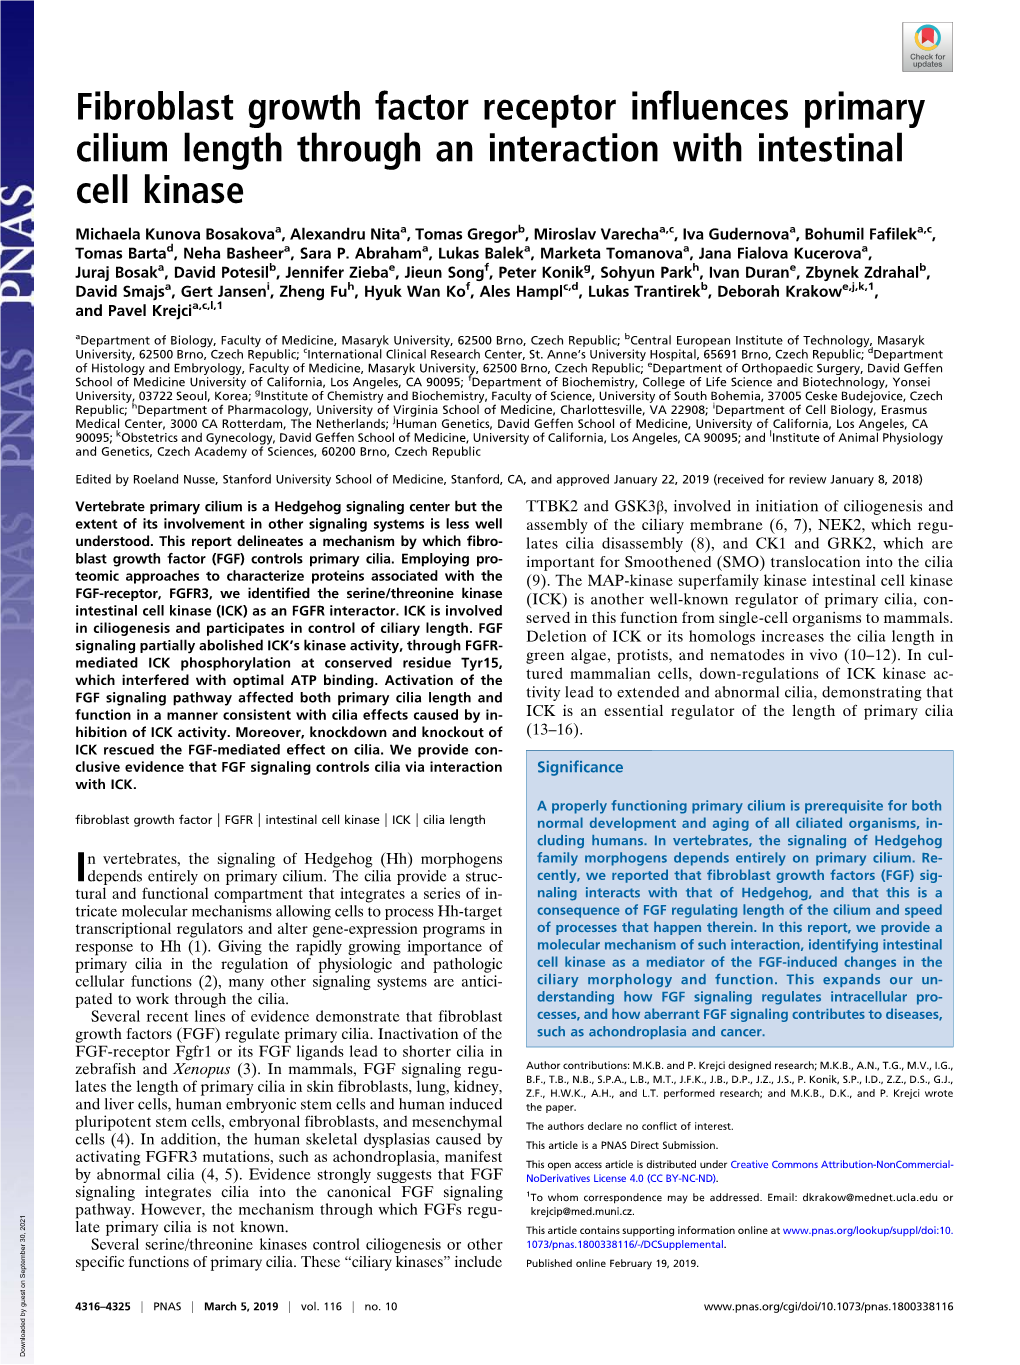 Fibroblast Growth Factor Receptor Influences Primary Cilium Length Through an Interaction with Intestinal Cell Kinase